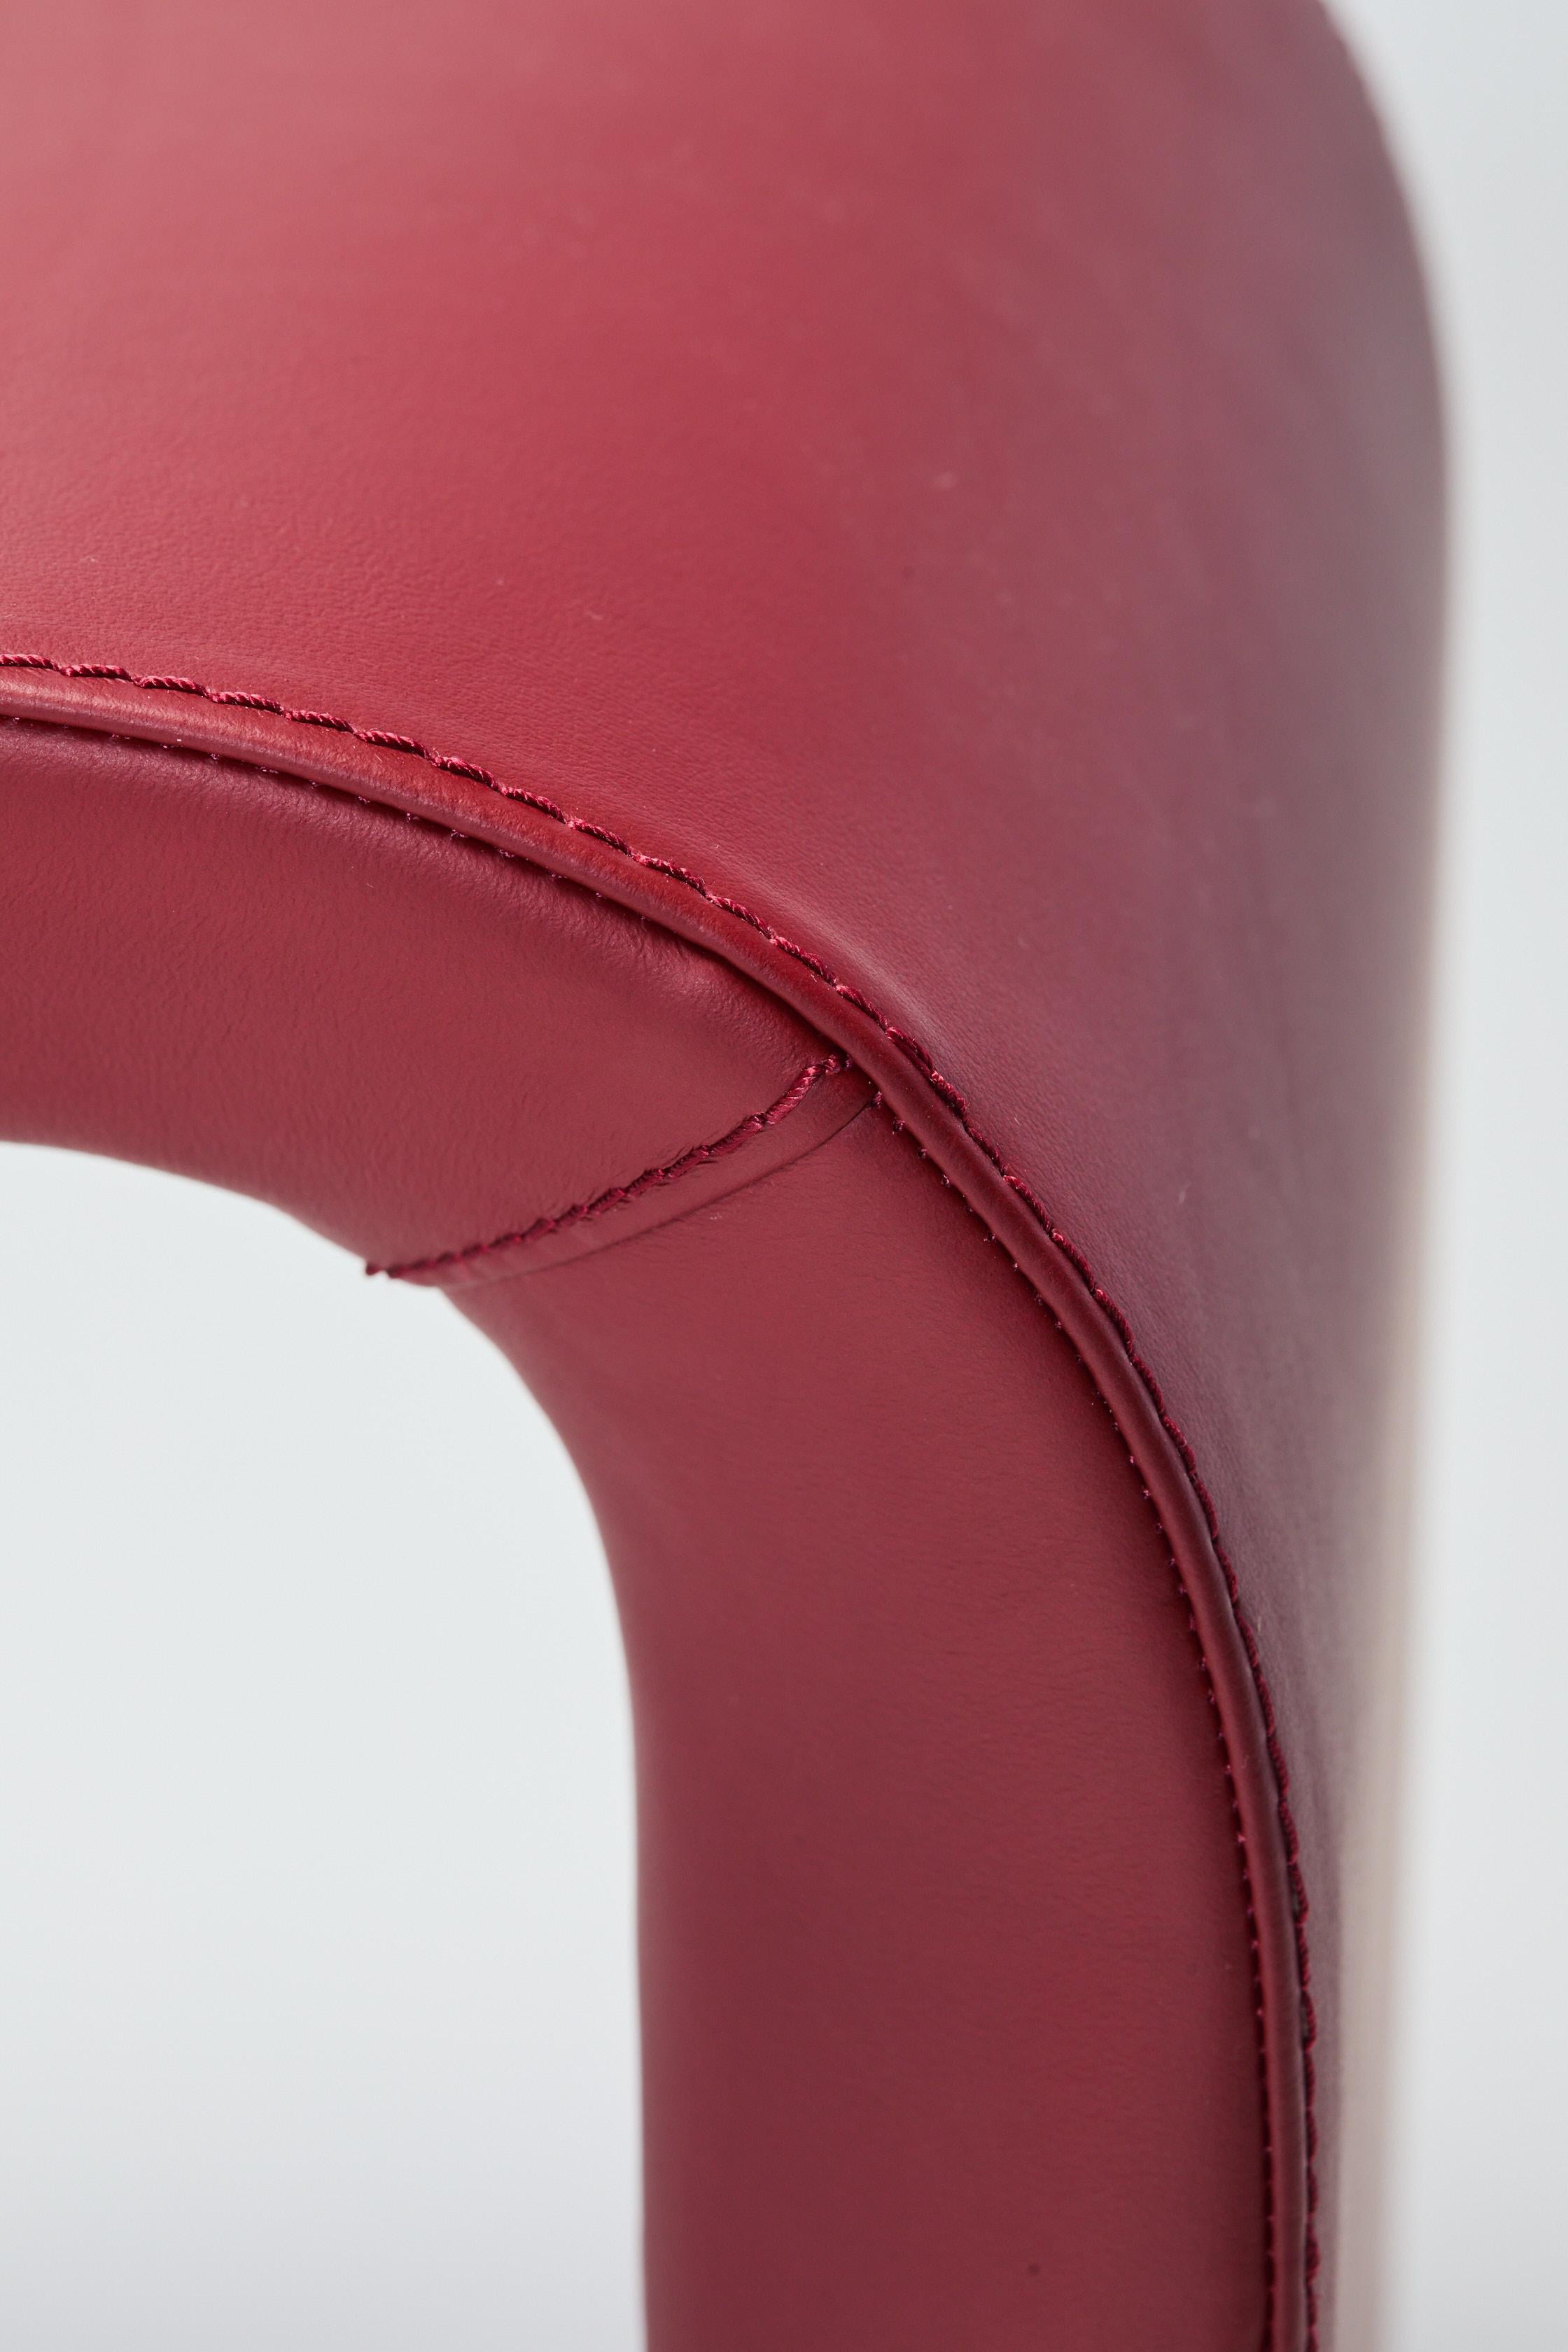 Minimalist Bench, SOA by Reda Amalou Design, 2021, Leather, Walnut & Bronze For Sale